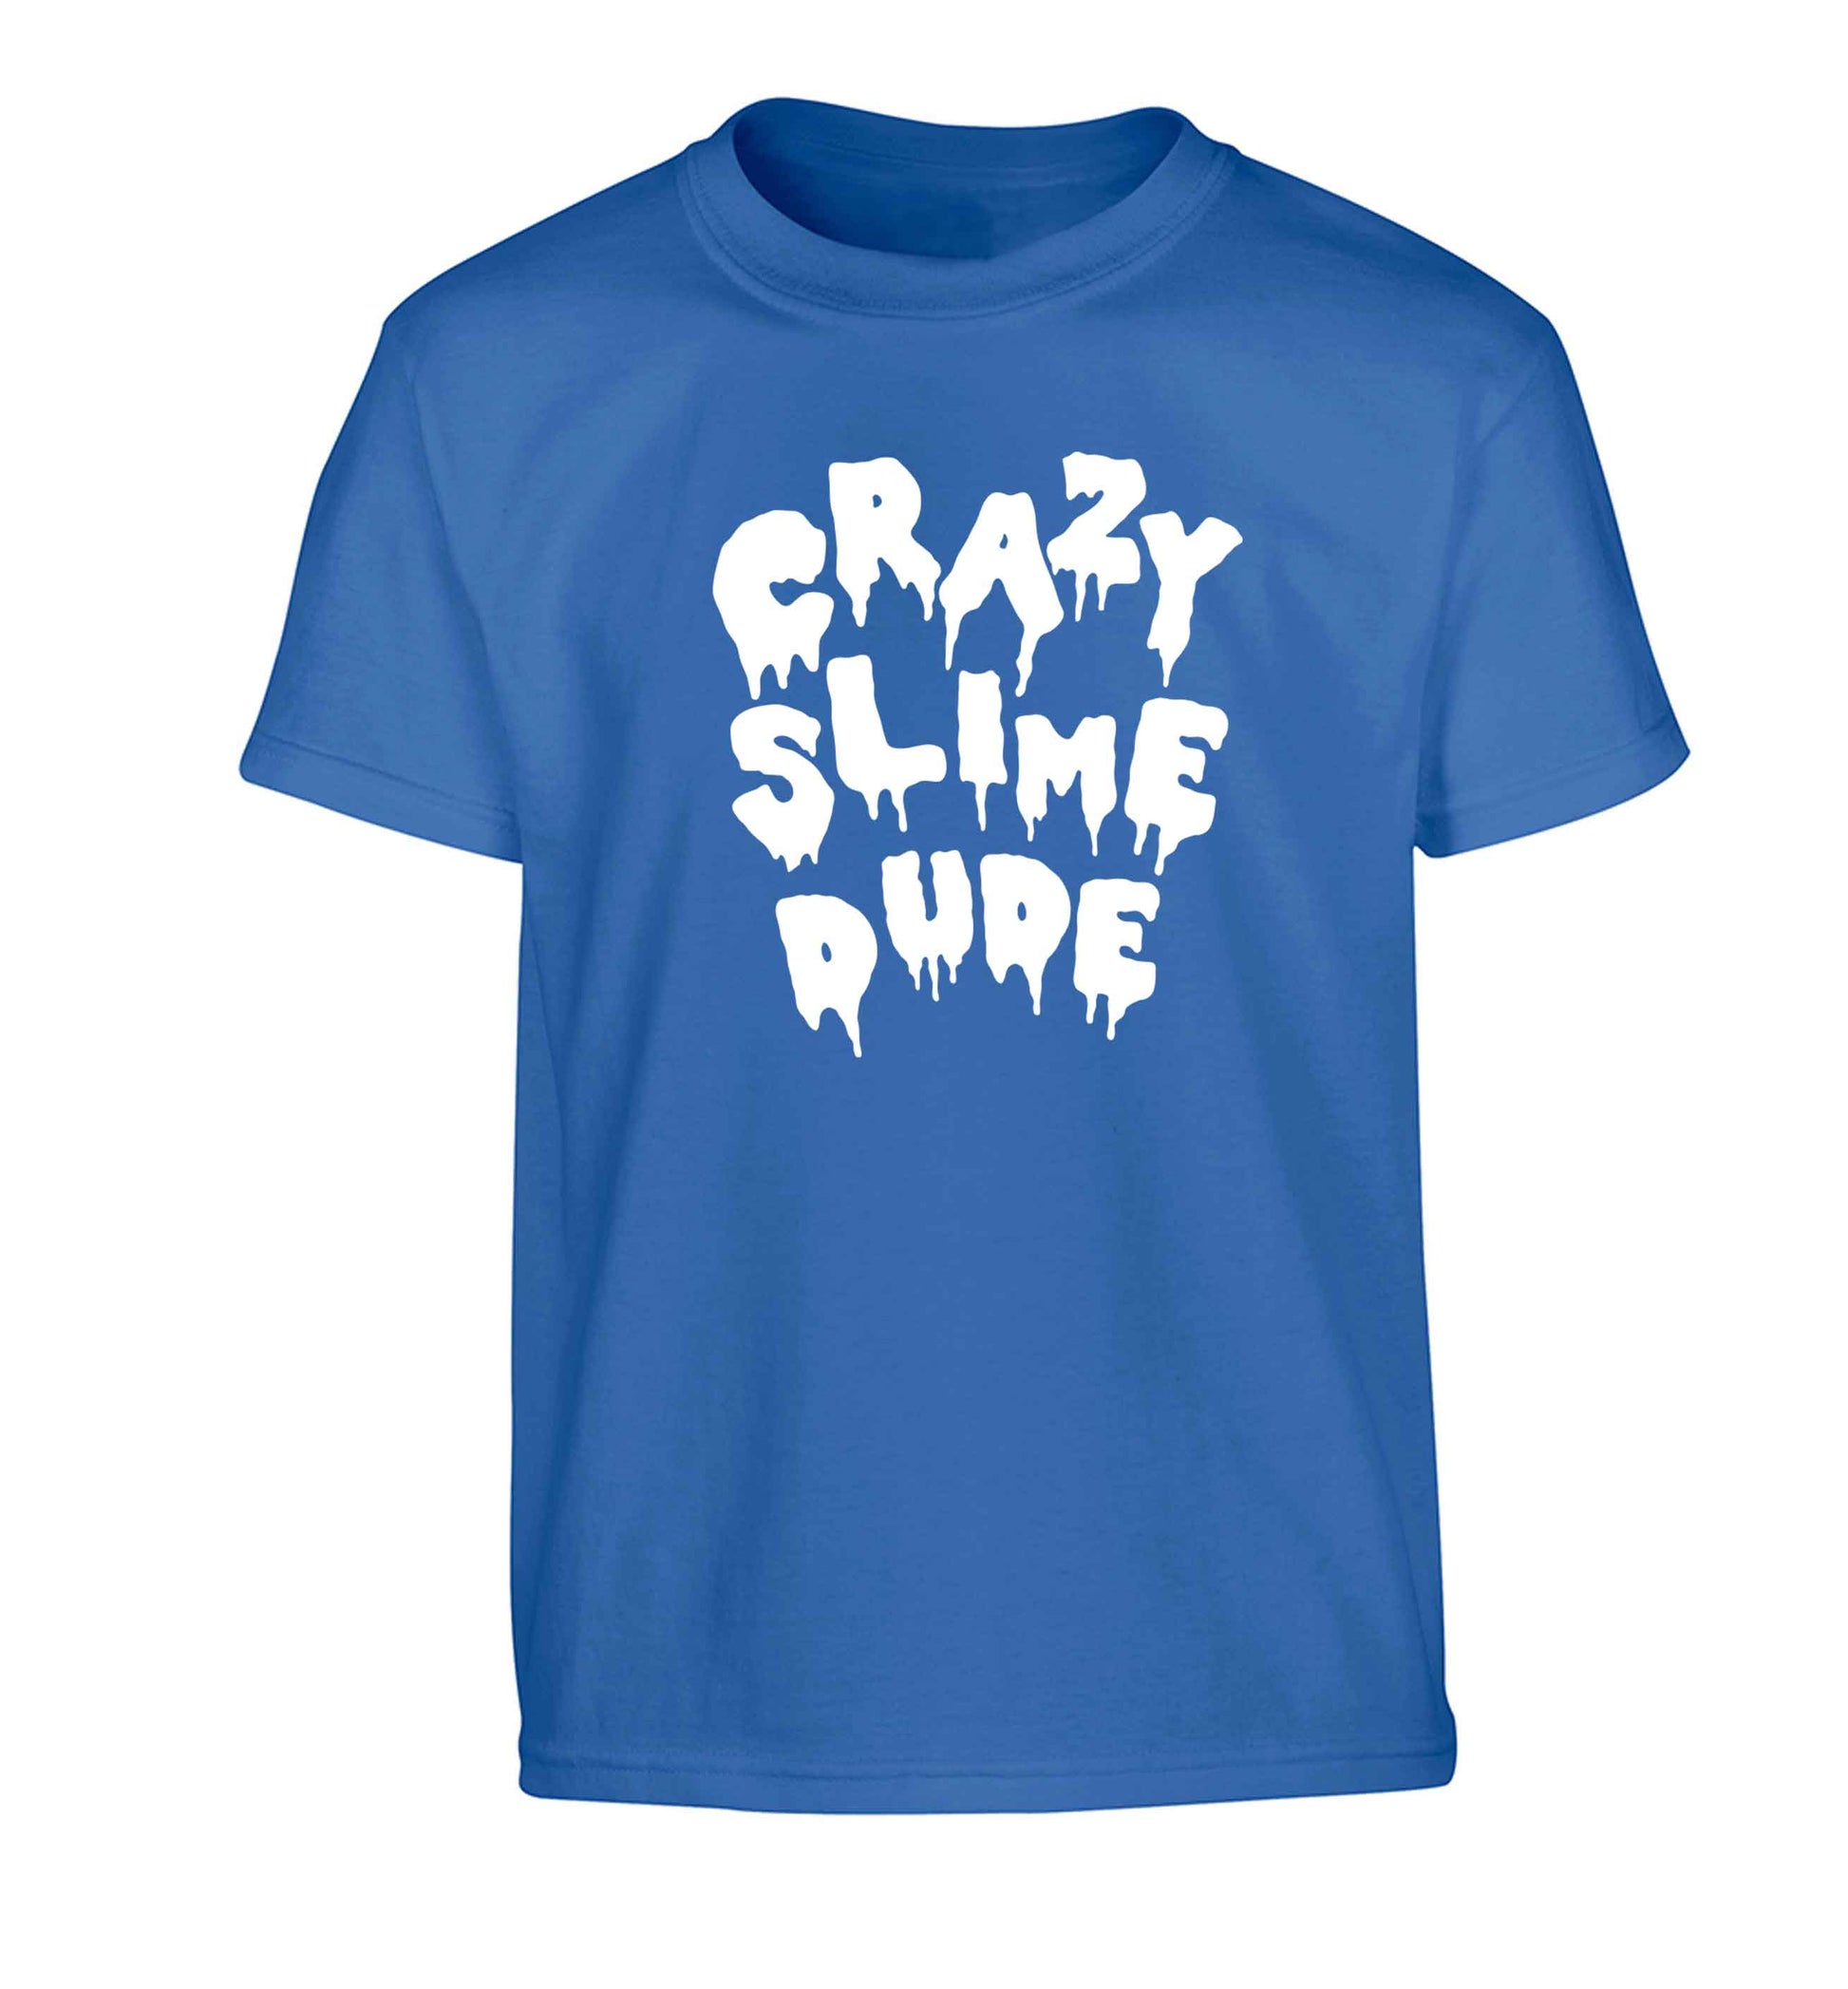 Crazy slime dude Children's blue Tshirt 12-13 Years